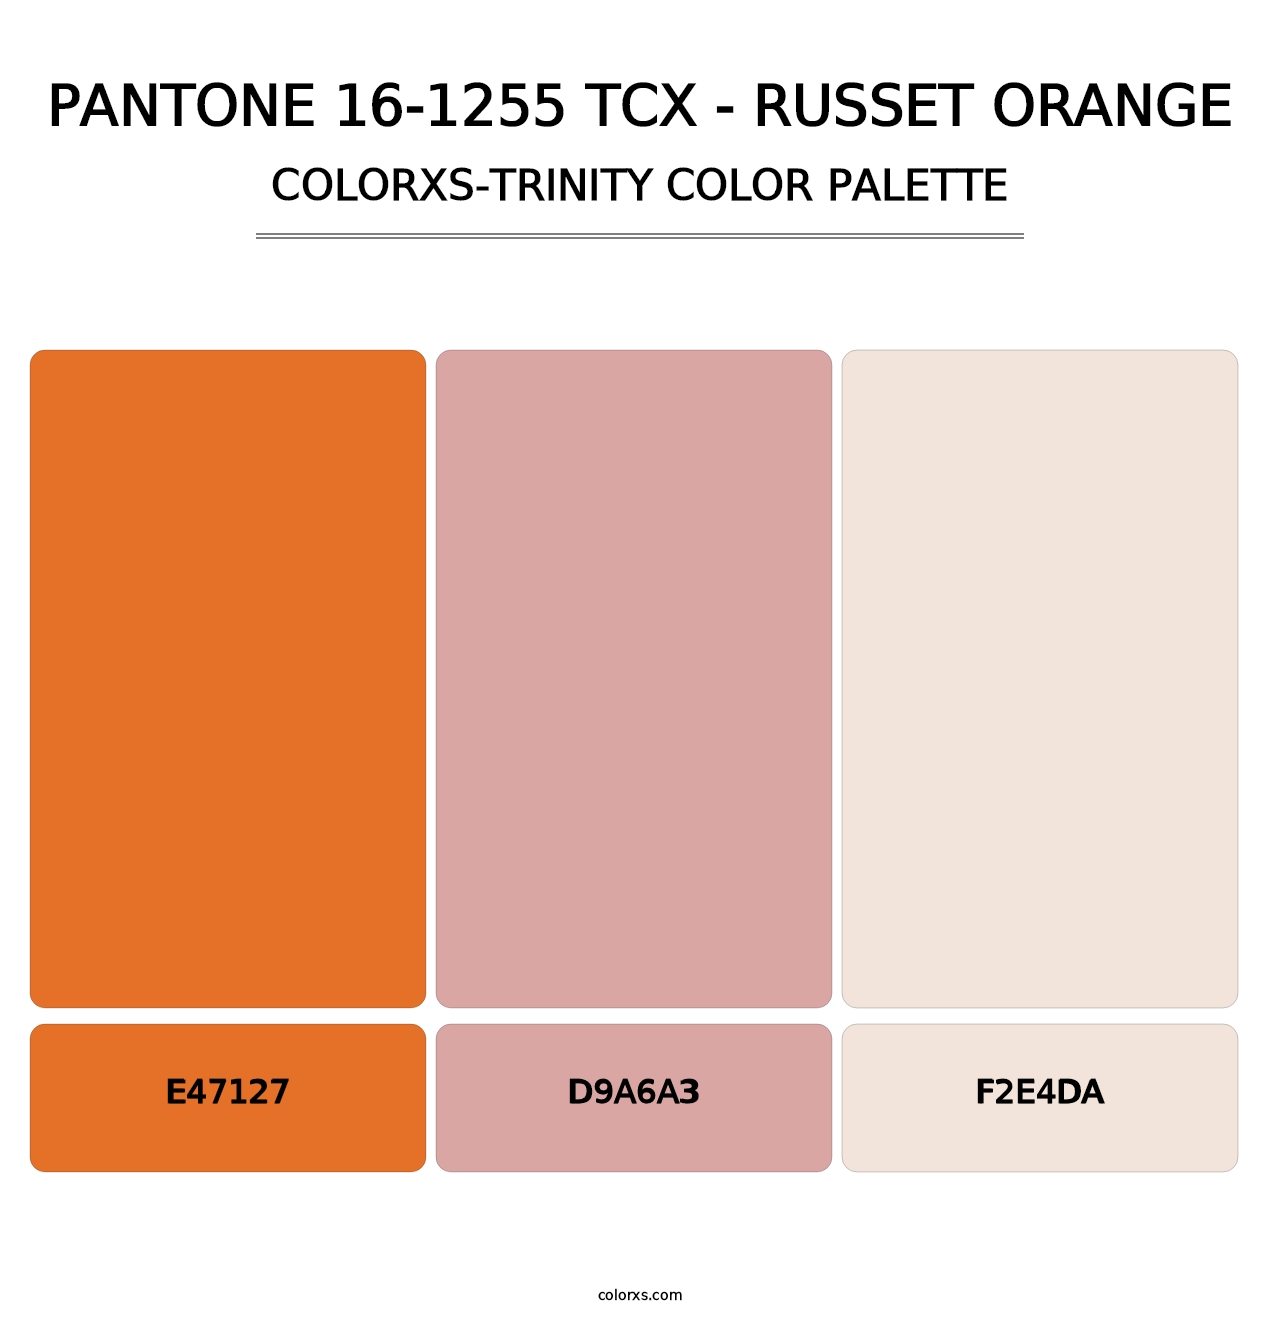 PANTONE 16-1255 TCX - Russet Orange - Colorxs Trinity Palette